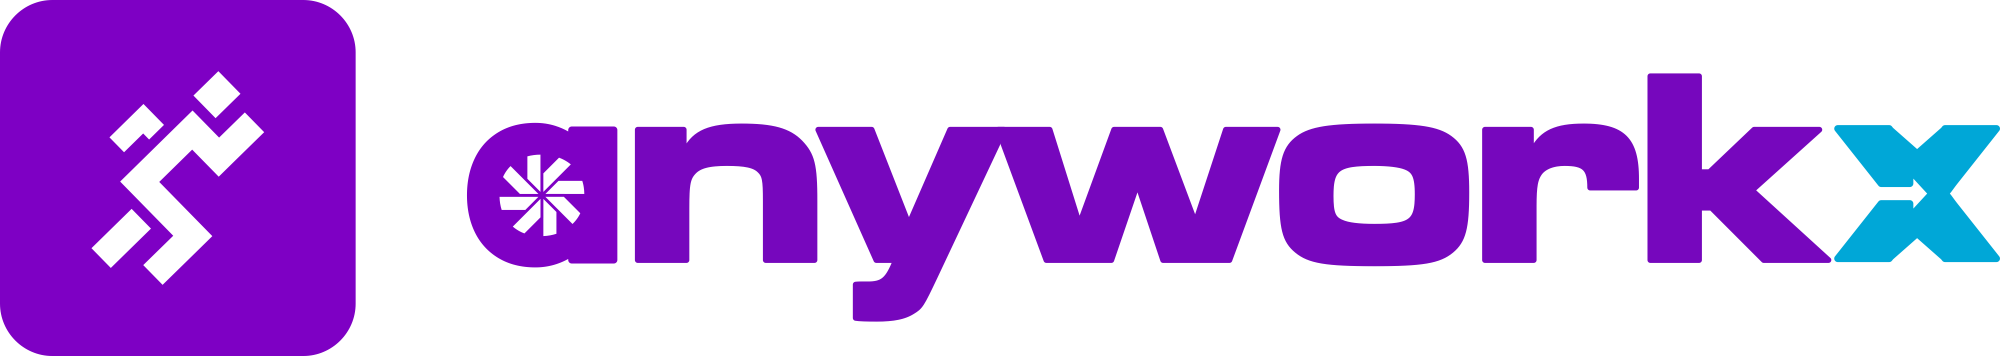 anyworkx logo